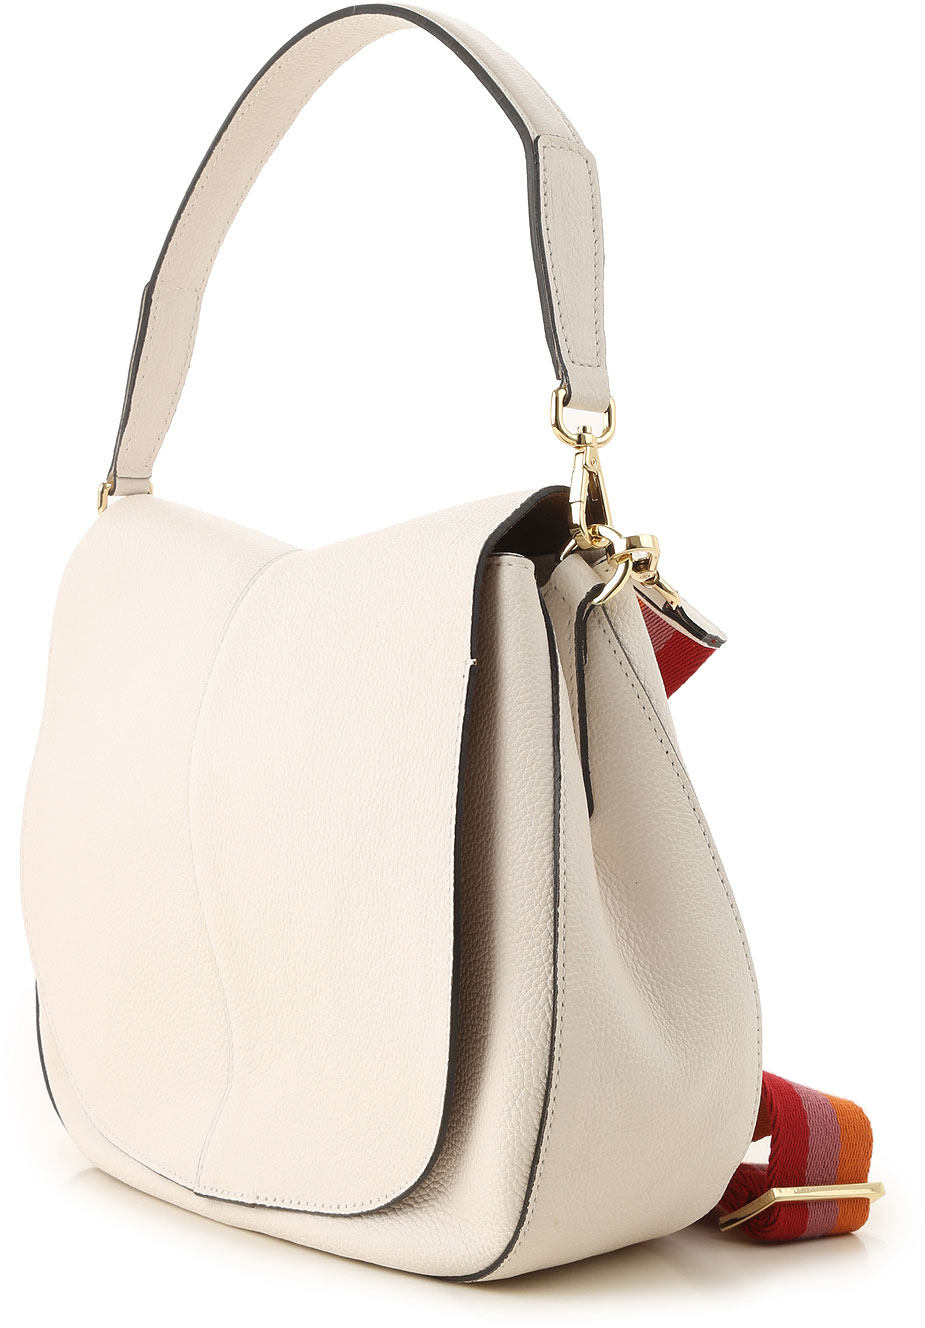 Handbags Gianni Chiarini, Style code: 6037-0lx-bianco